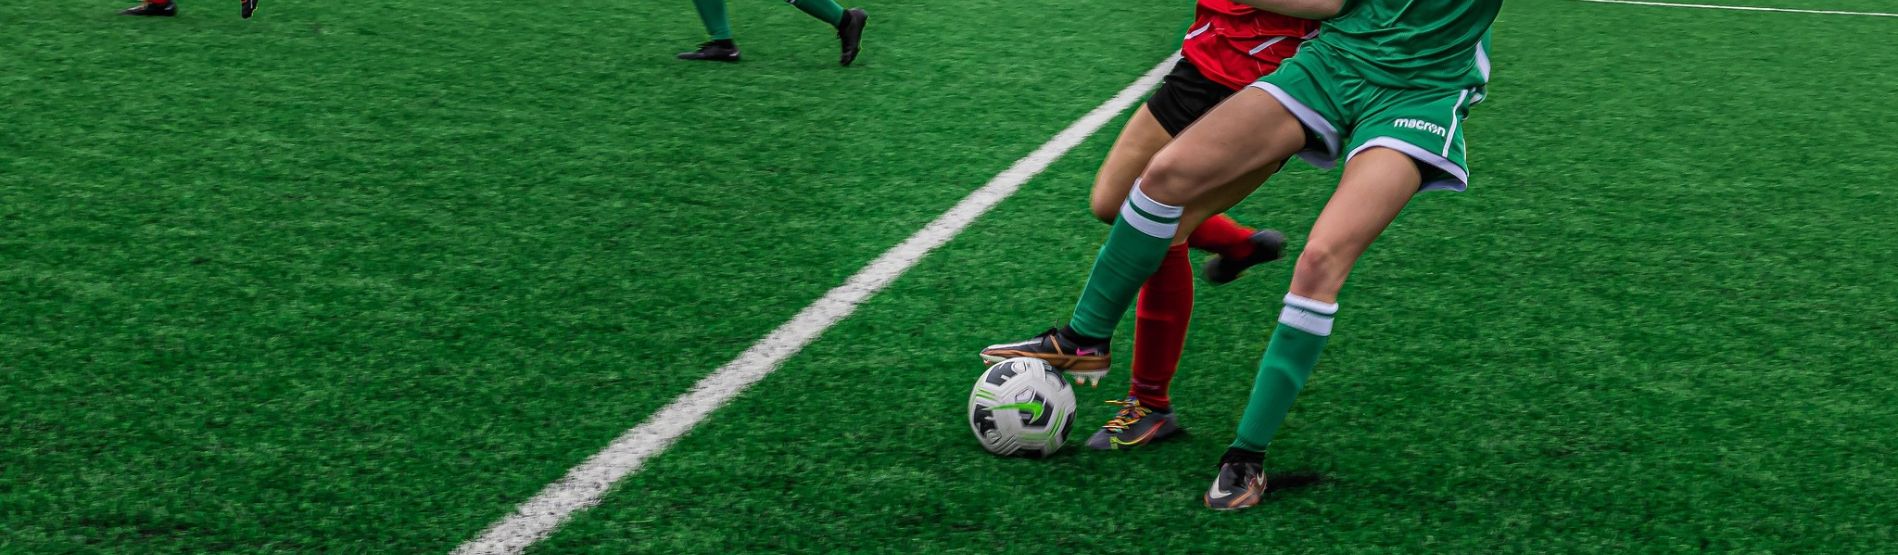 Swansea University women's football player dribbling ball during match